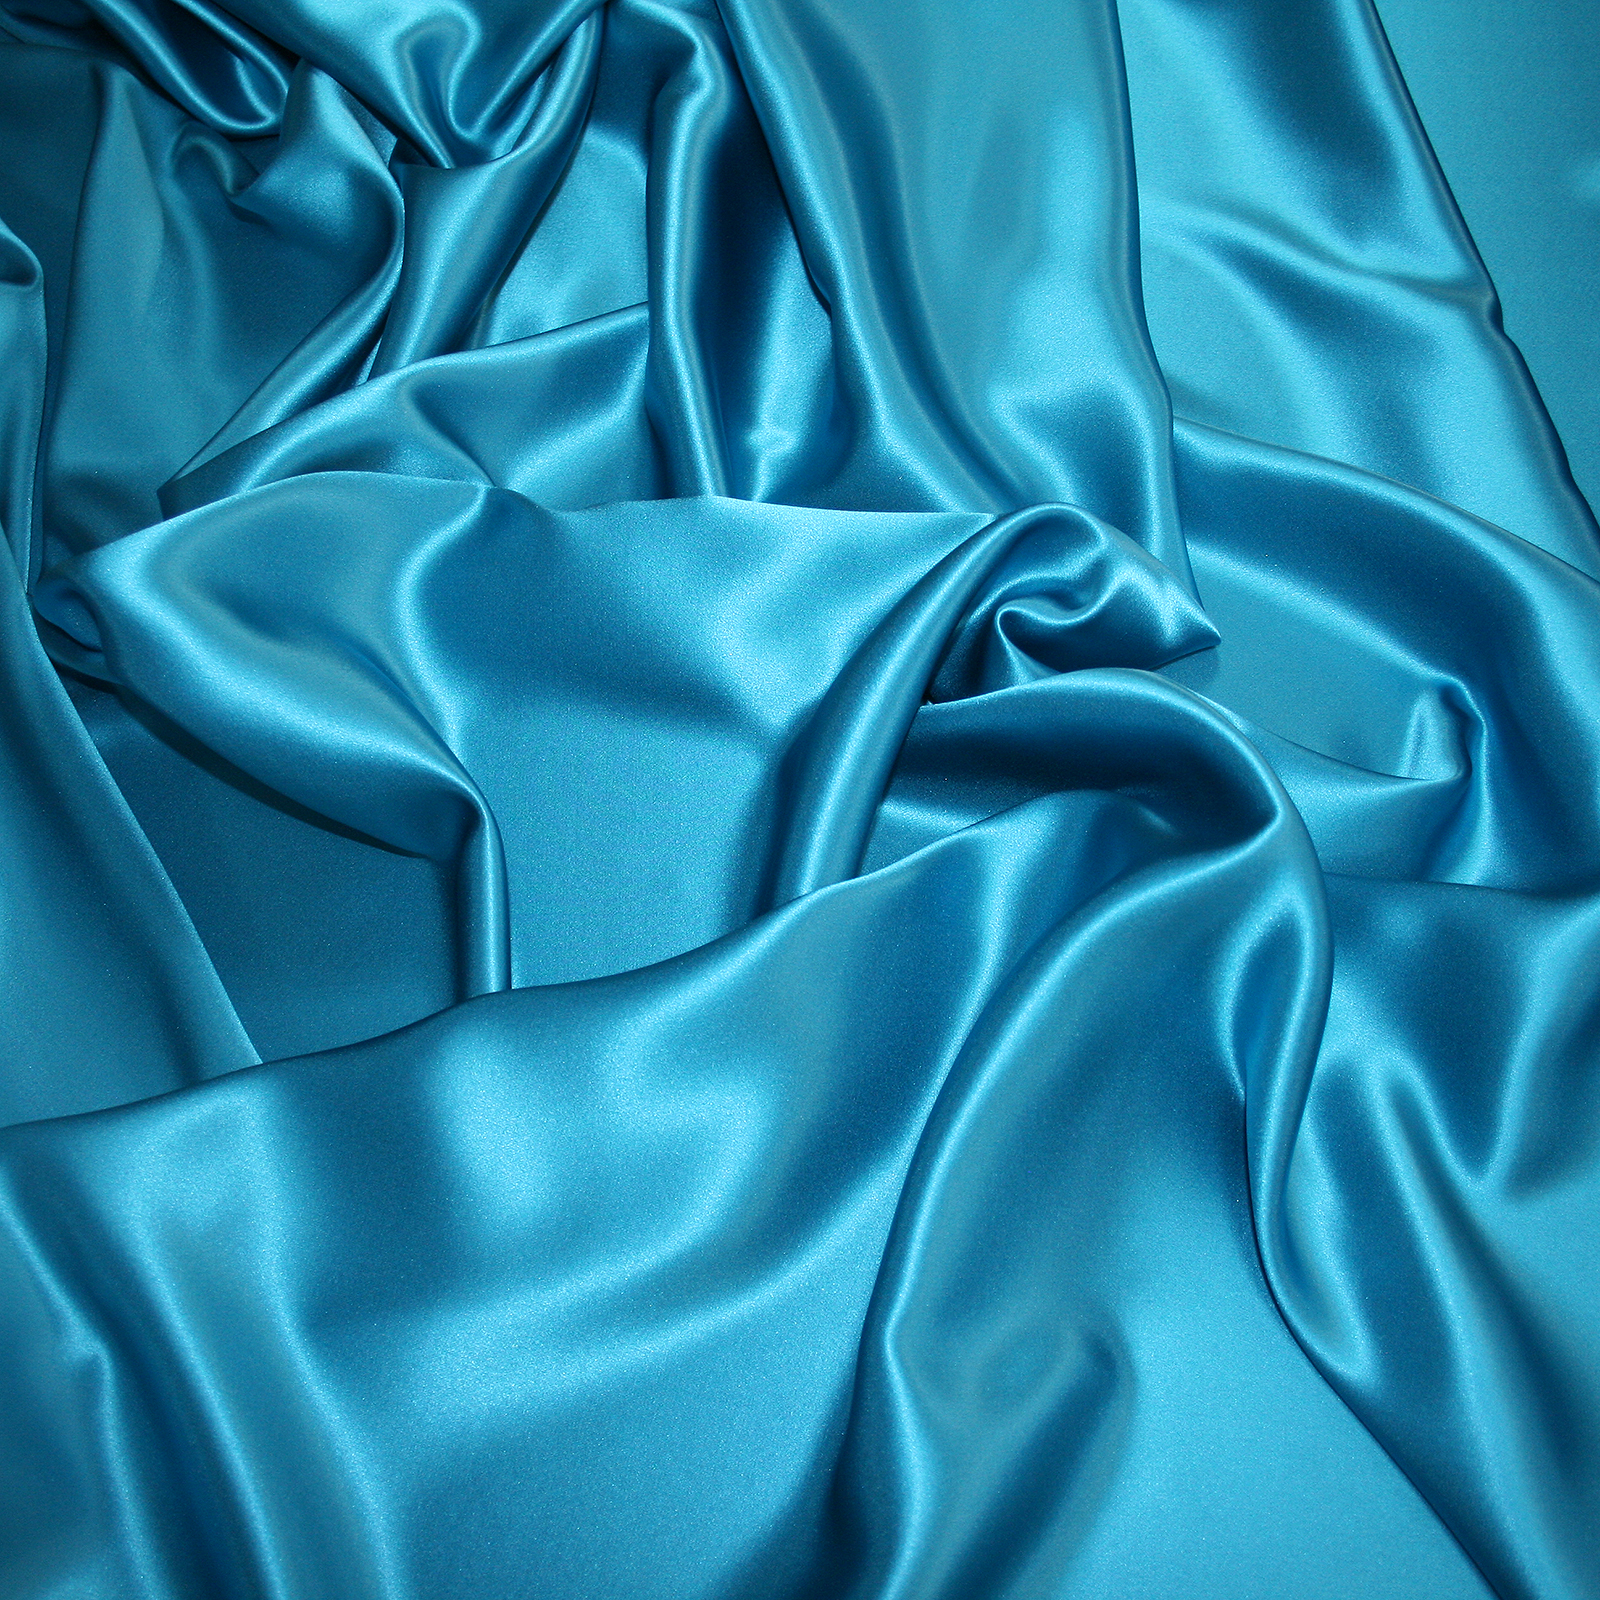 teal blue silk satin fabric high quality